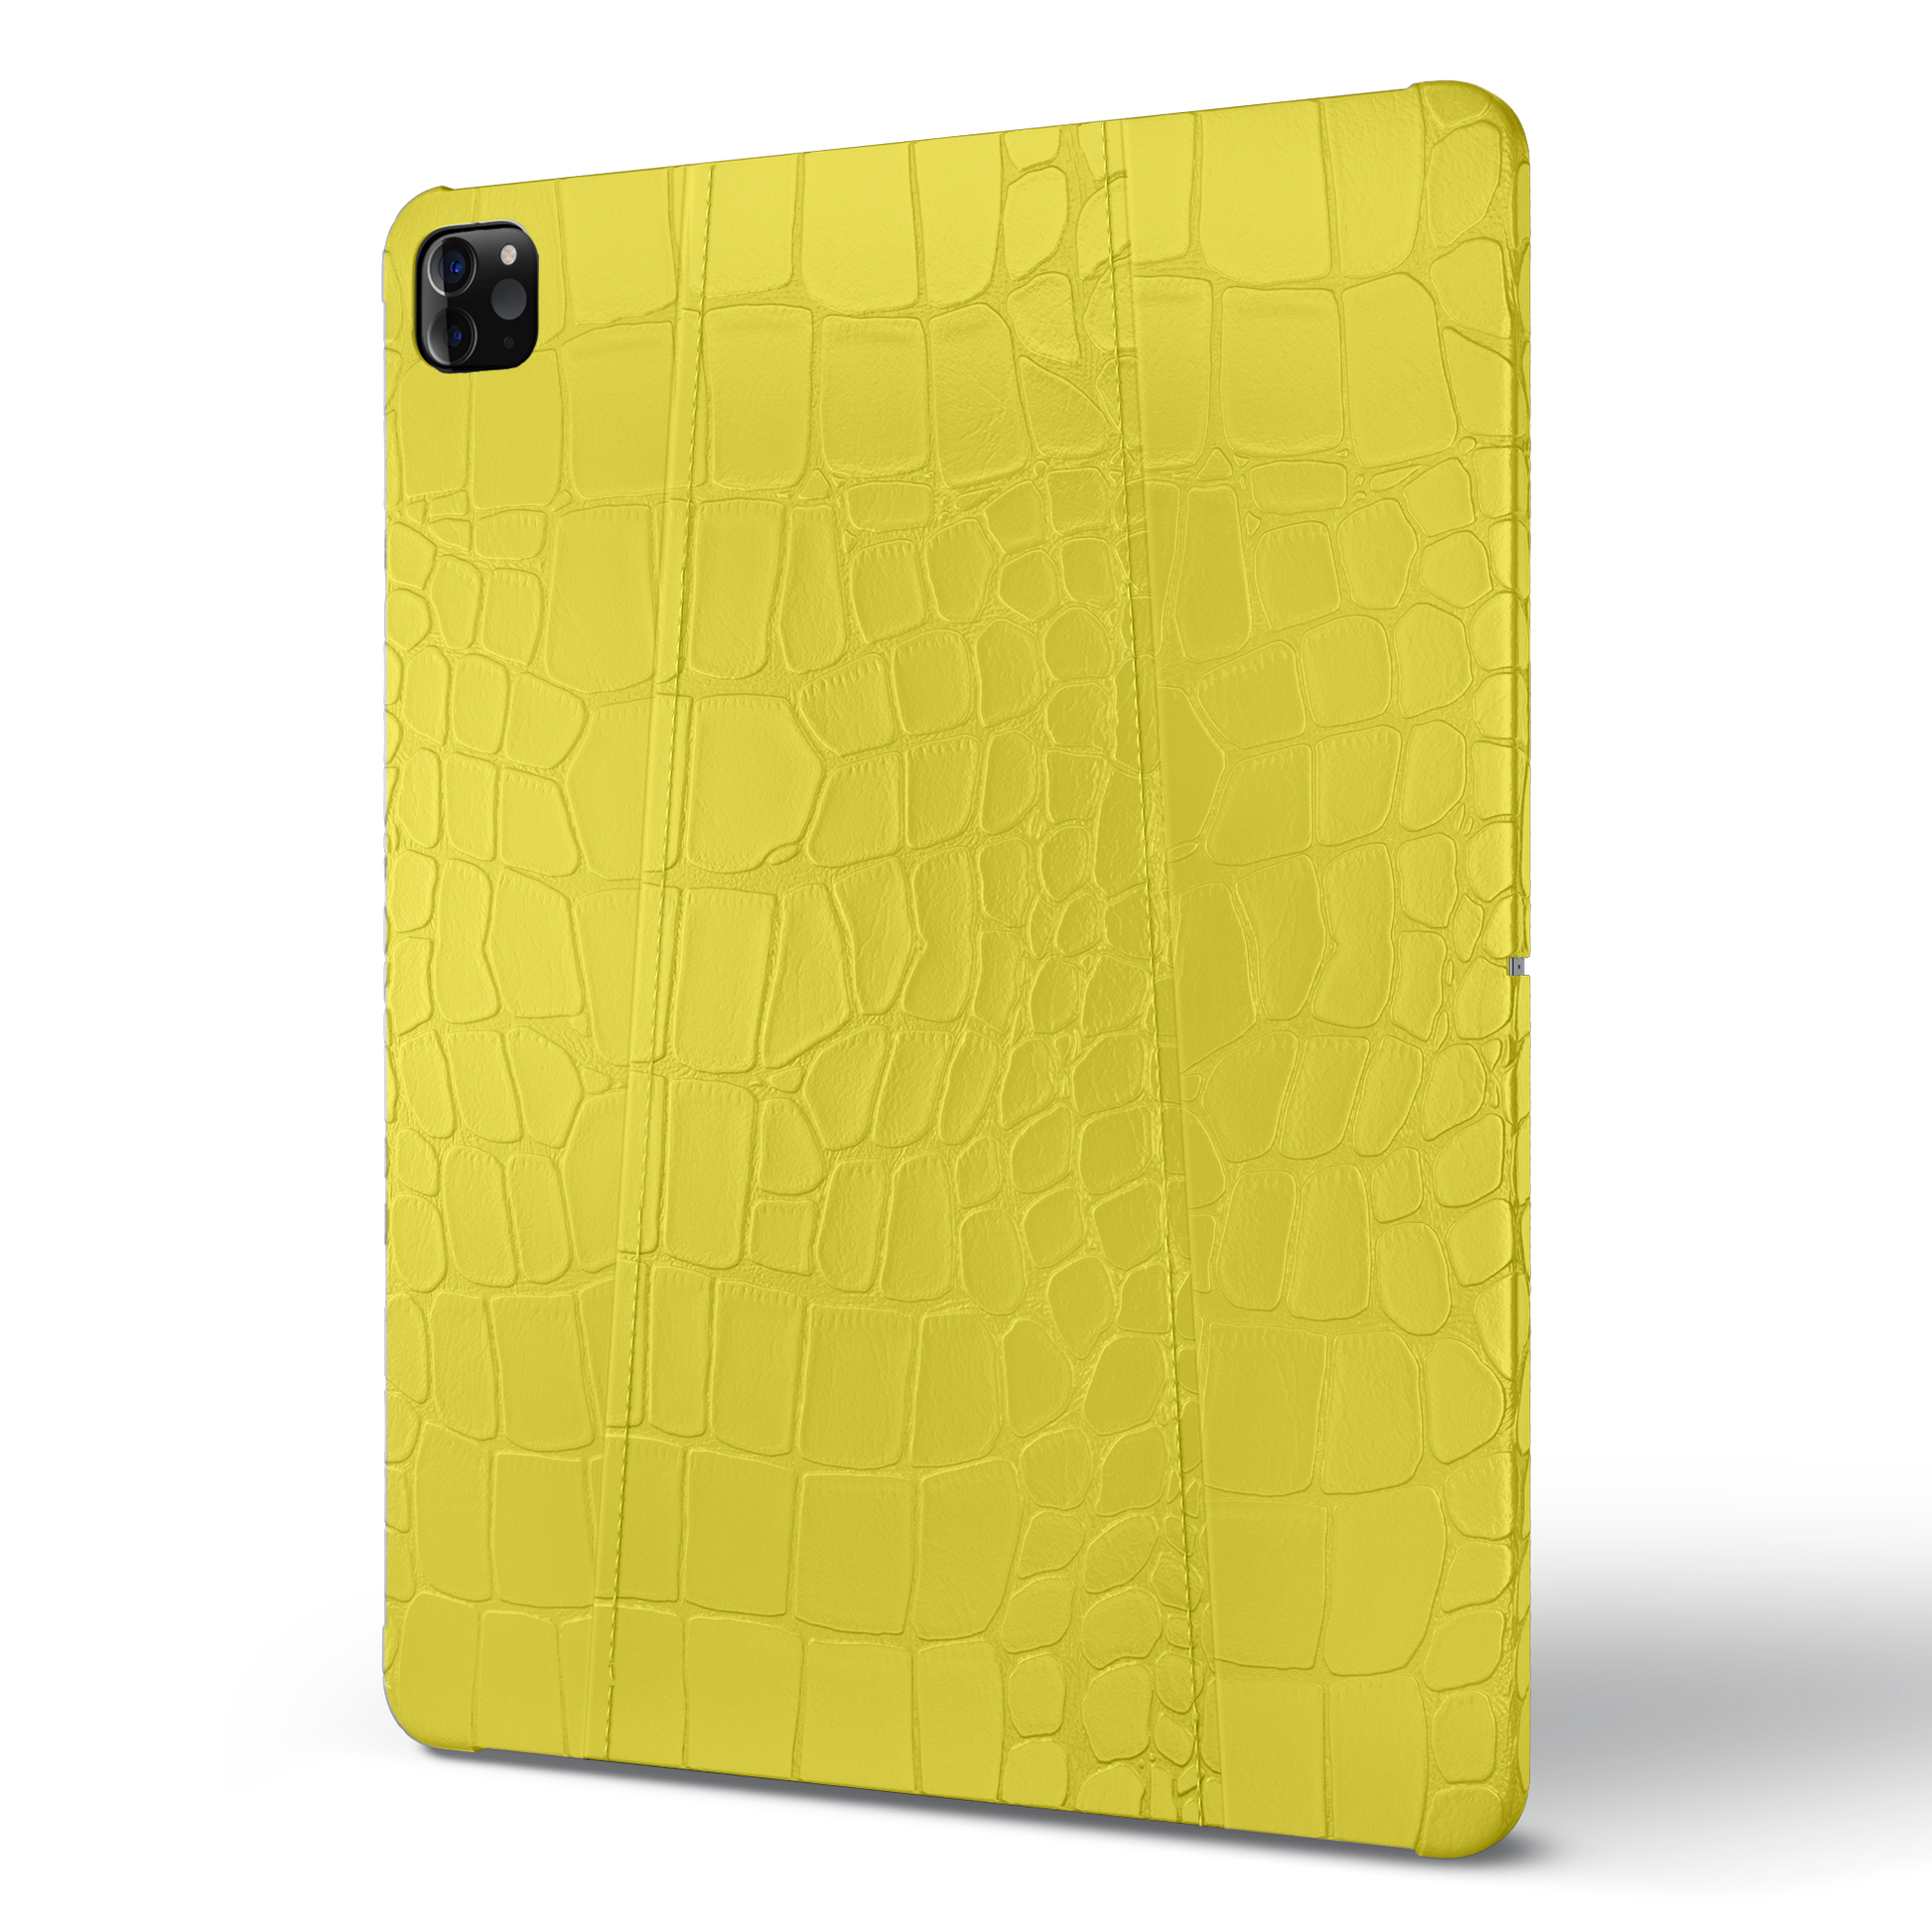 Ipad Pro (6th Gen) 12.9-inch Yellow Alligator Case